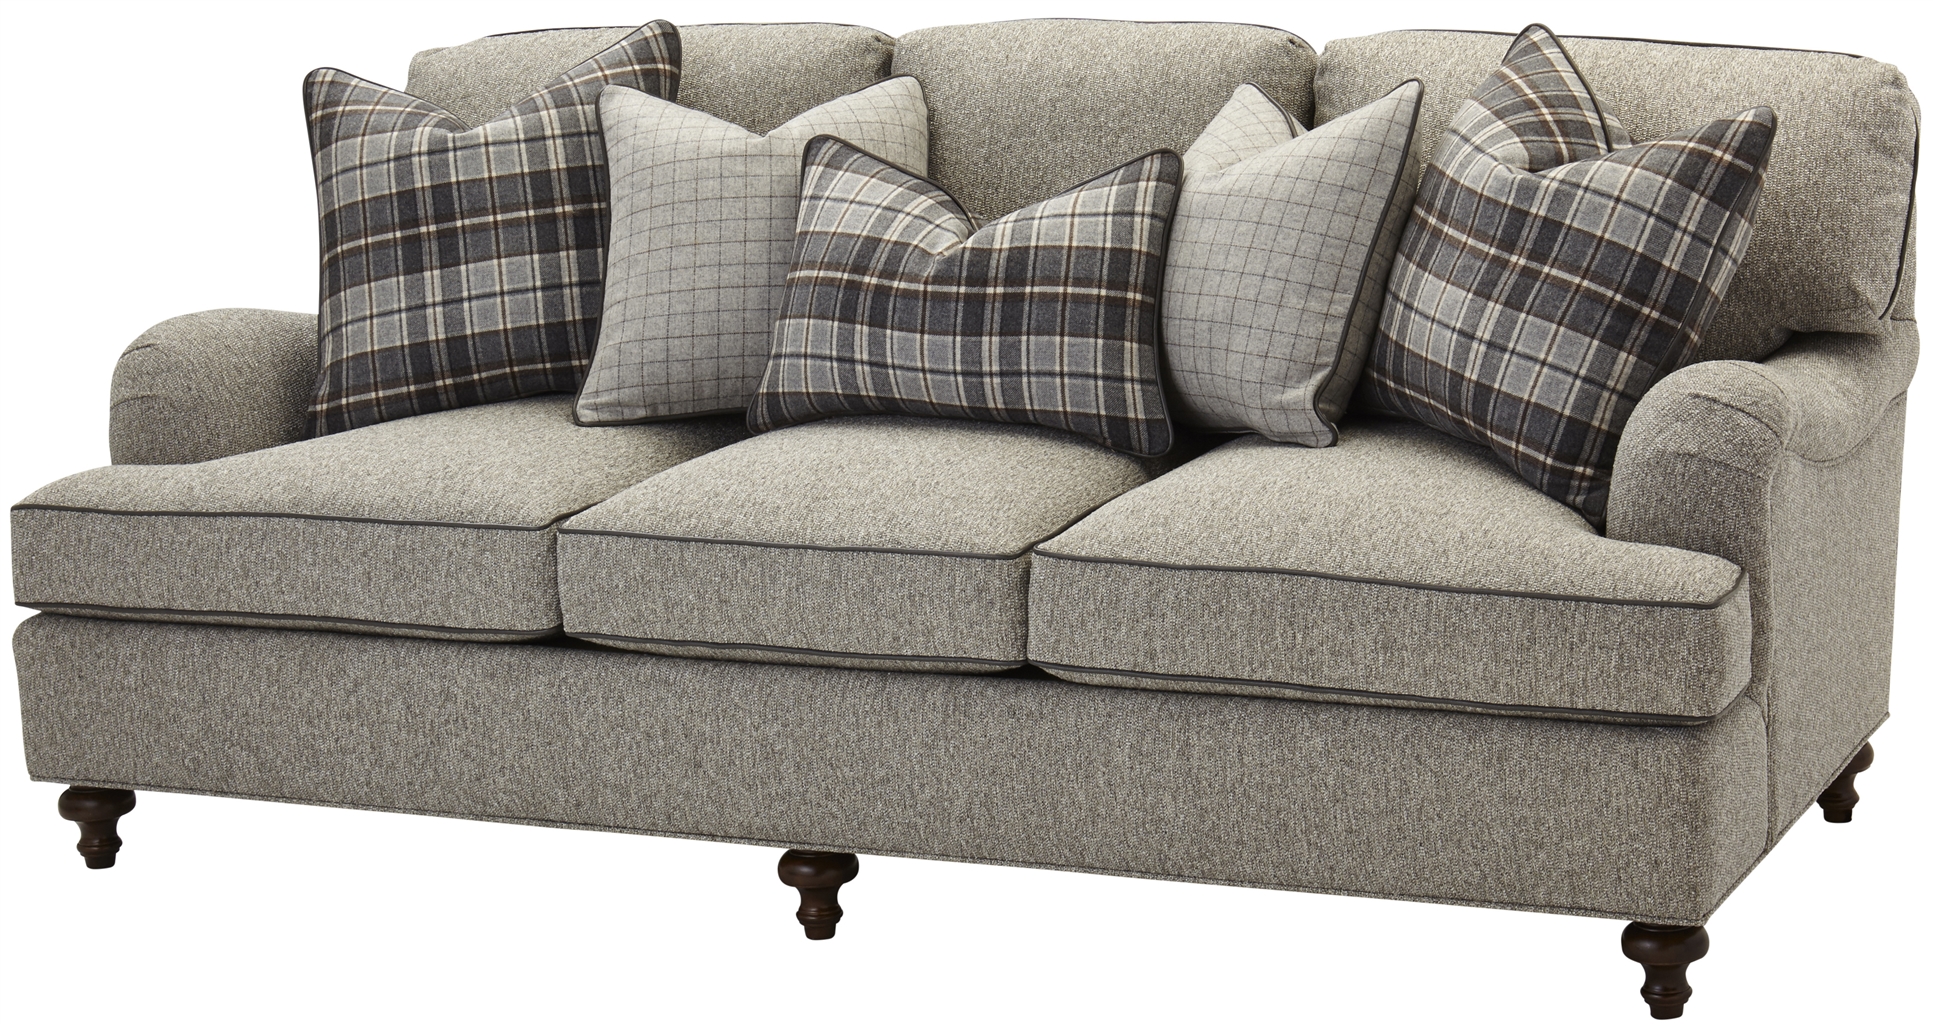 Upholstered Sofa in Gray